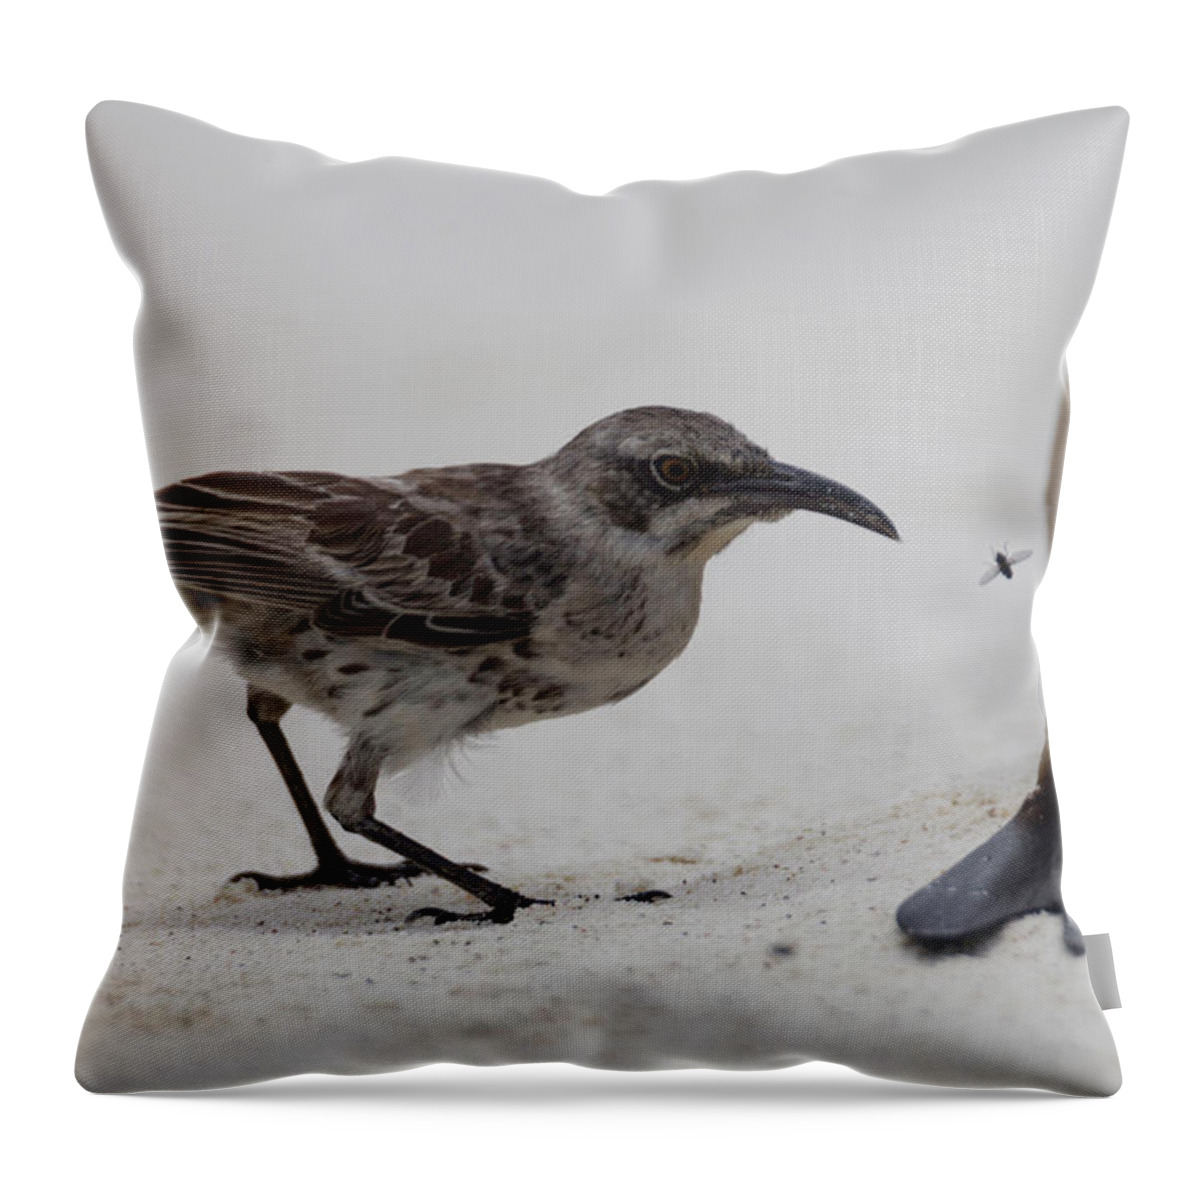 Galapagos Islands Throw Pillow featuring the photograph An Espanola Mockingbird Is Pushed Away by Peter Essick